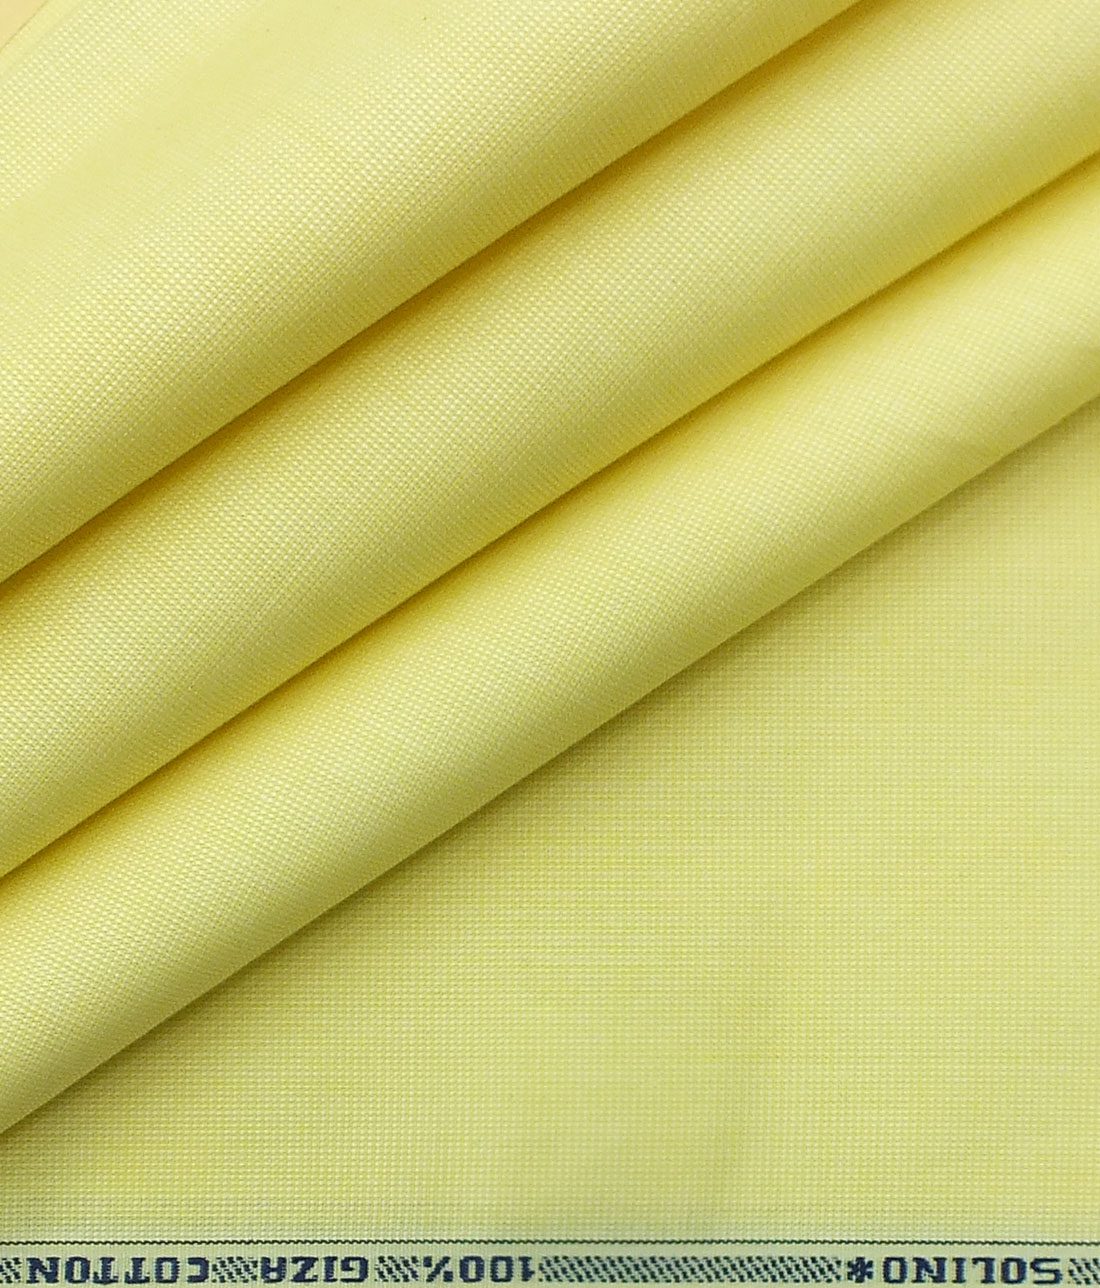 Solino Men's Lemon Yellow Giza Cotton Oxford Weave Shirt Fabric